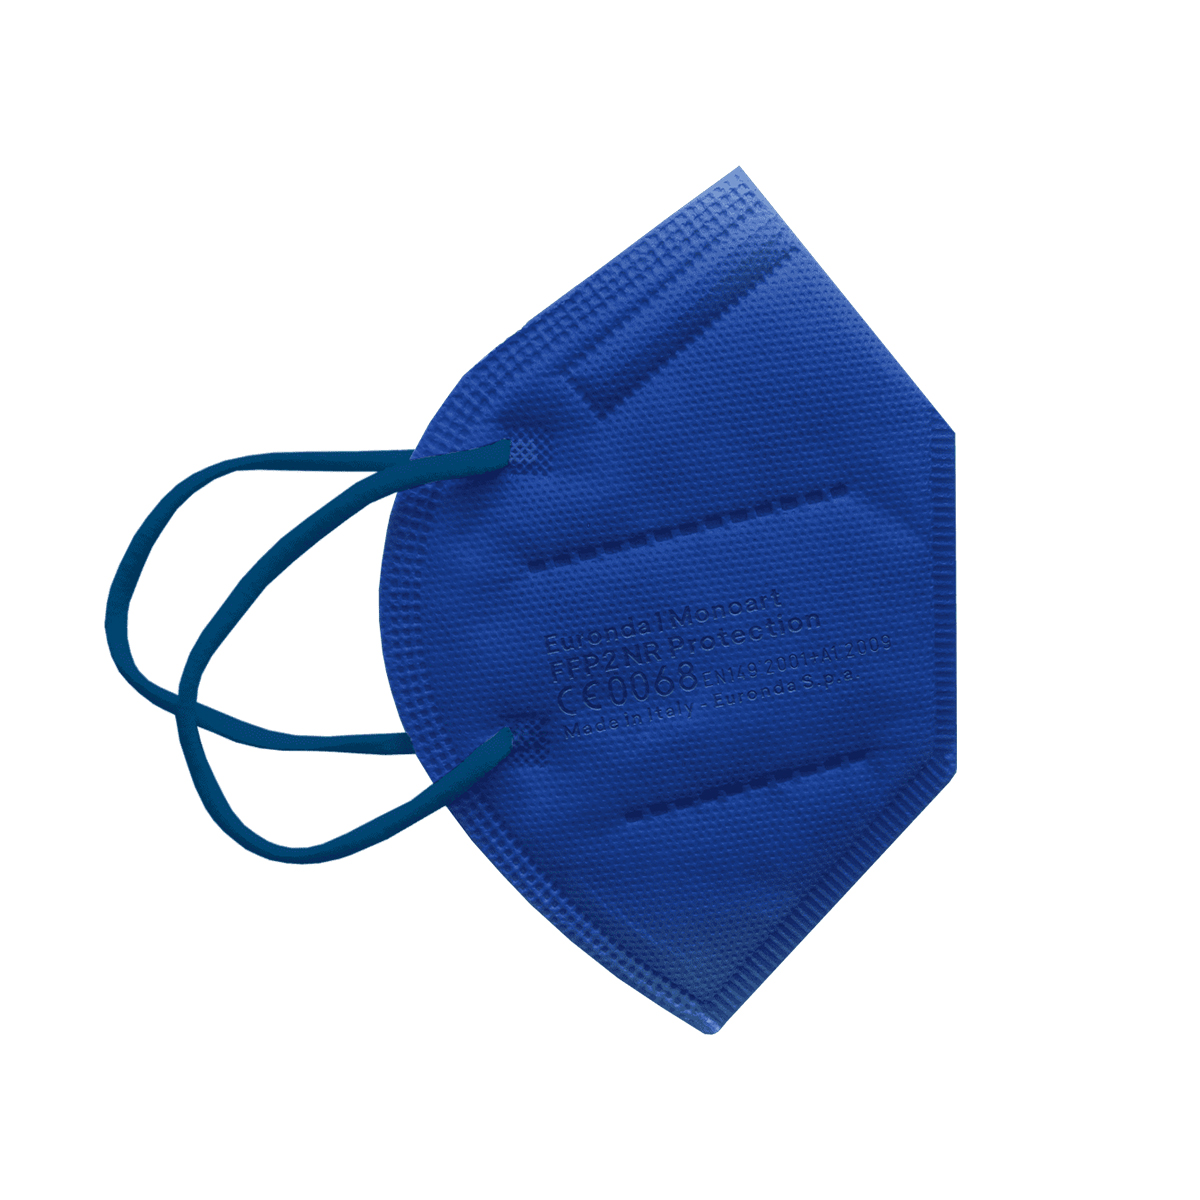 Monoart Schutzmaske FFP2 NR Farbe: capriblau (Euronda)